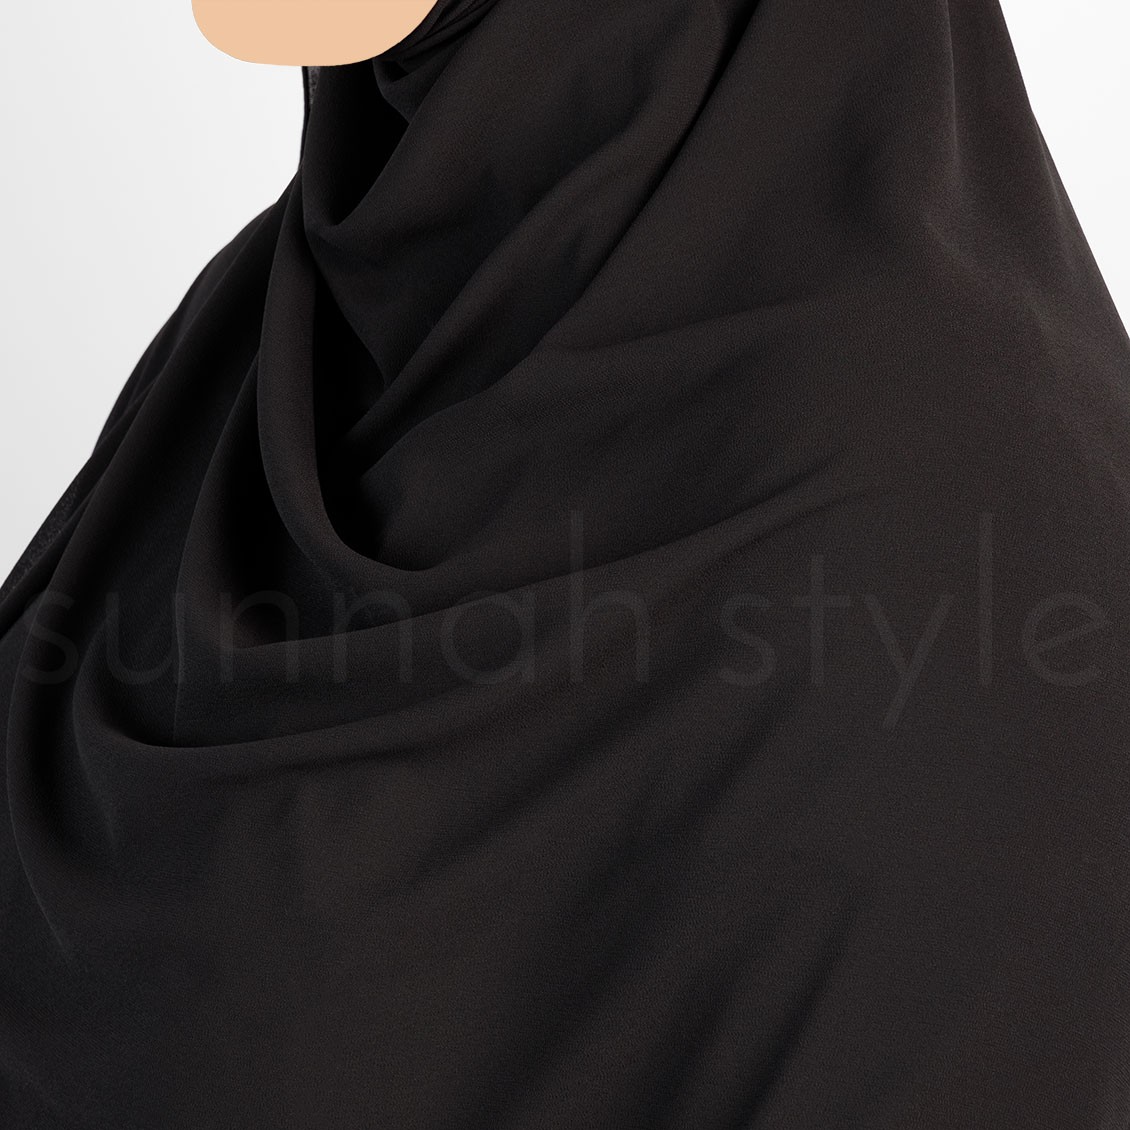 Sunnah Style Pebble Shayla XL Black